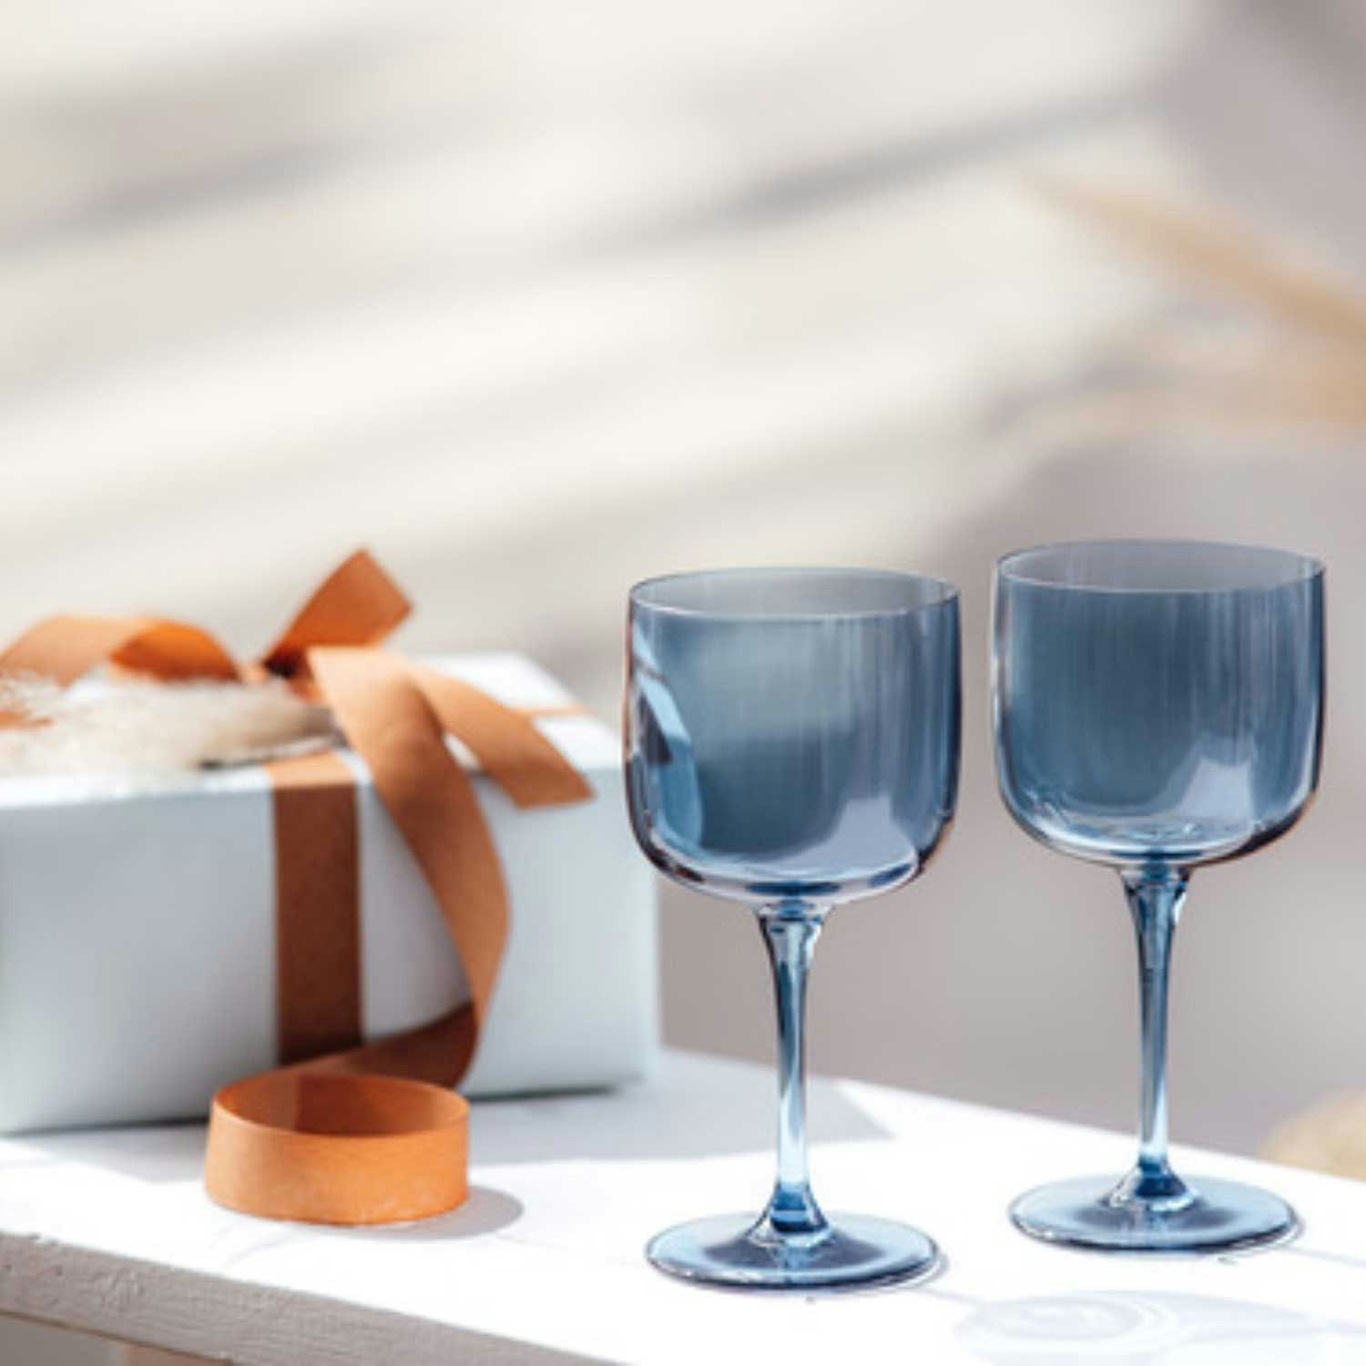 https://royaldesign.com/image/2/villeroy-boch-like-wine-glasses-2-pack-53?w=800&quality=80